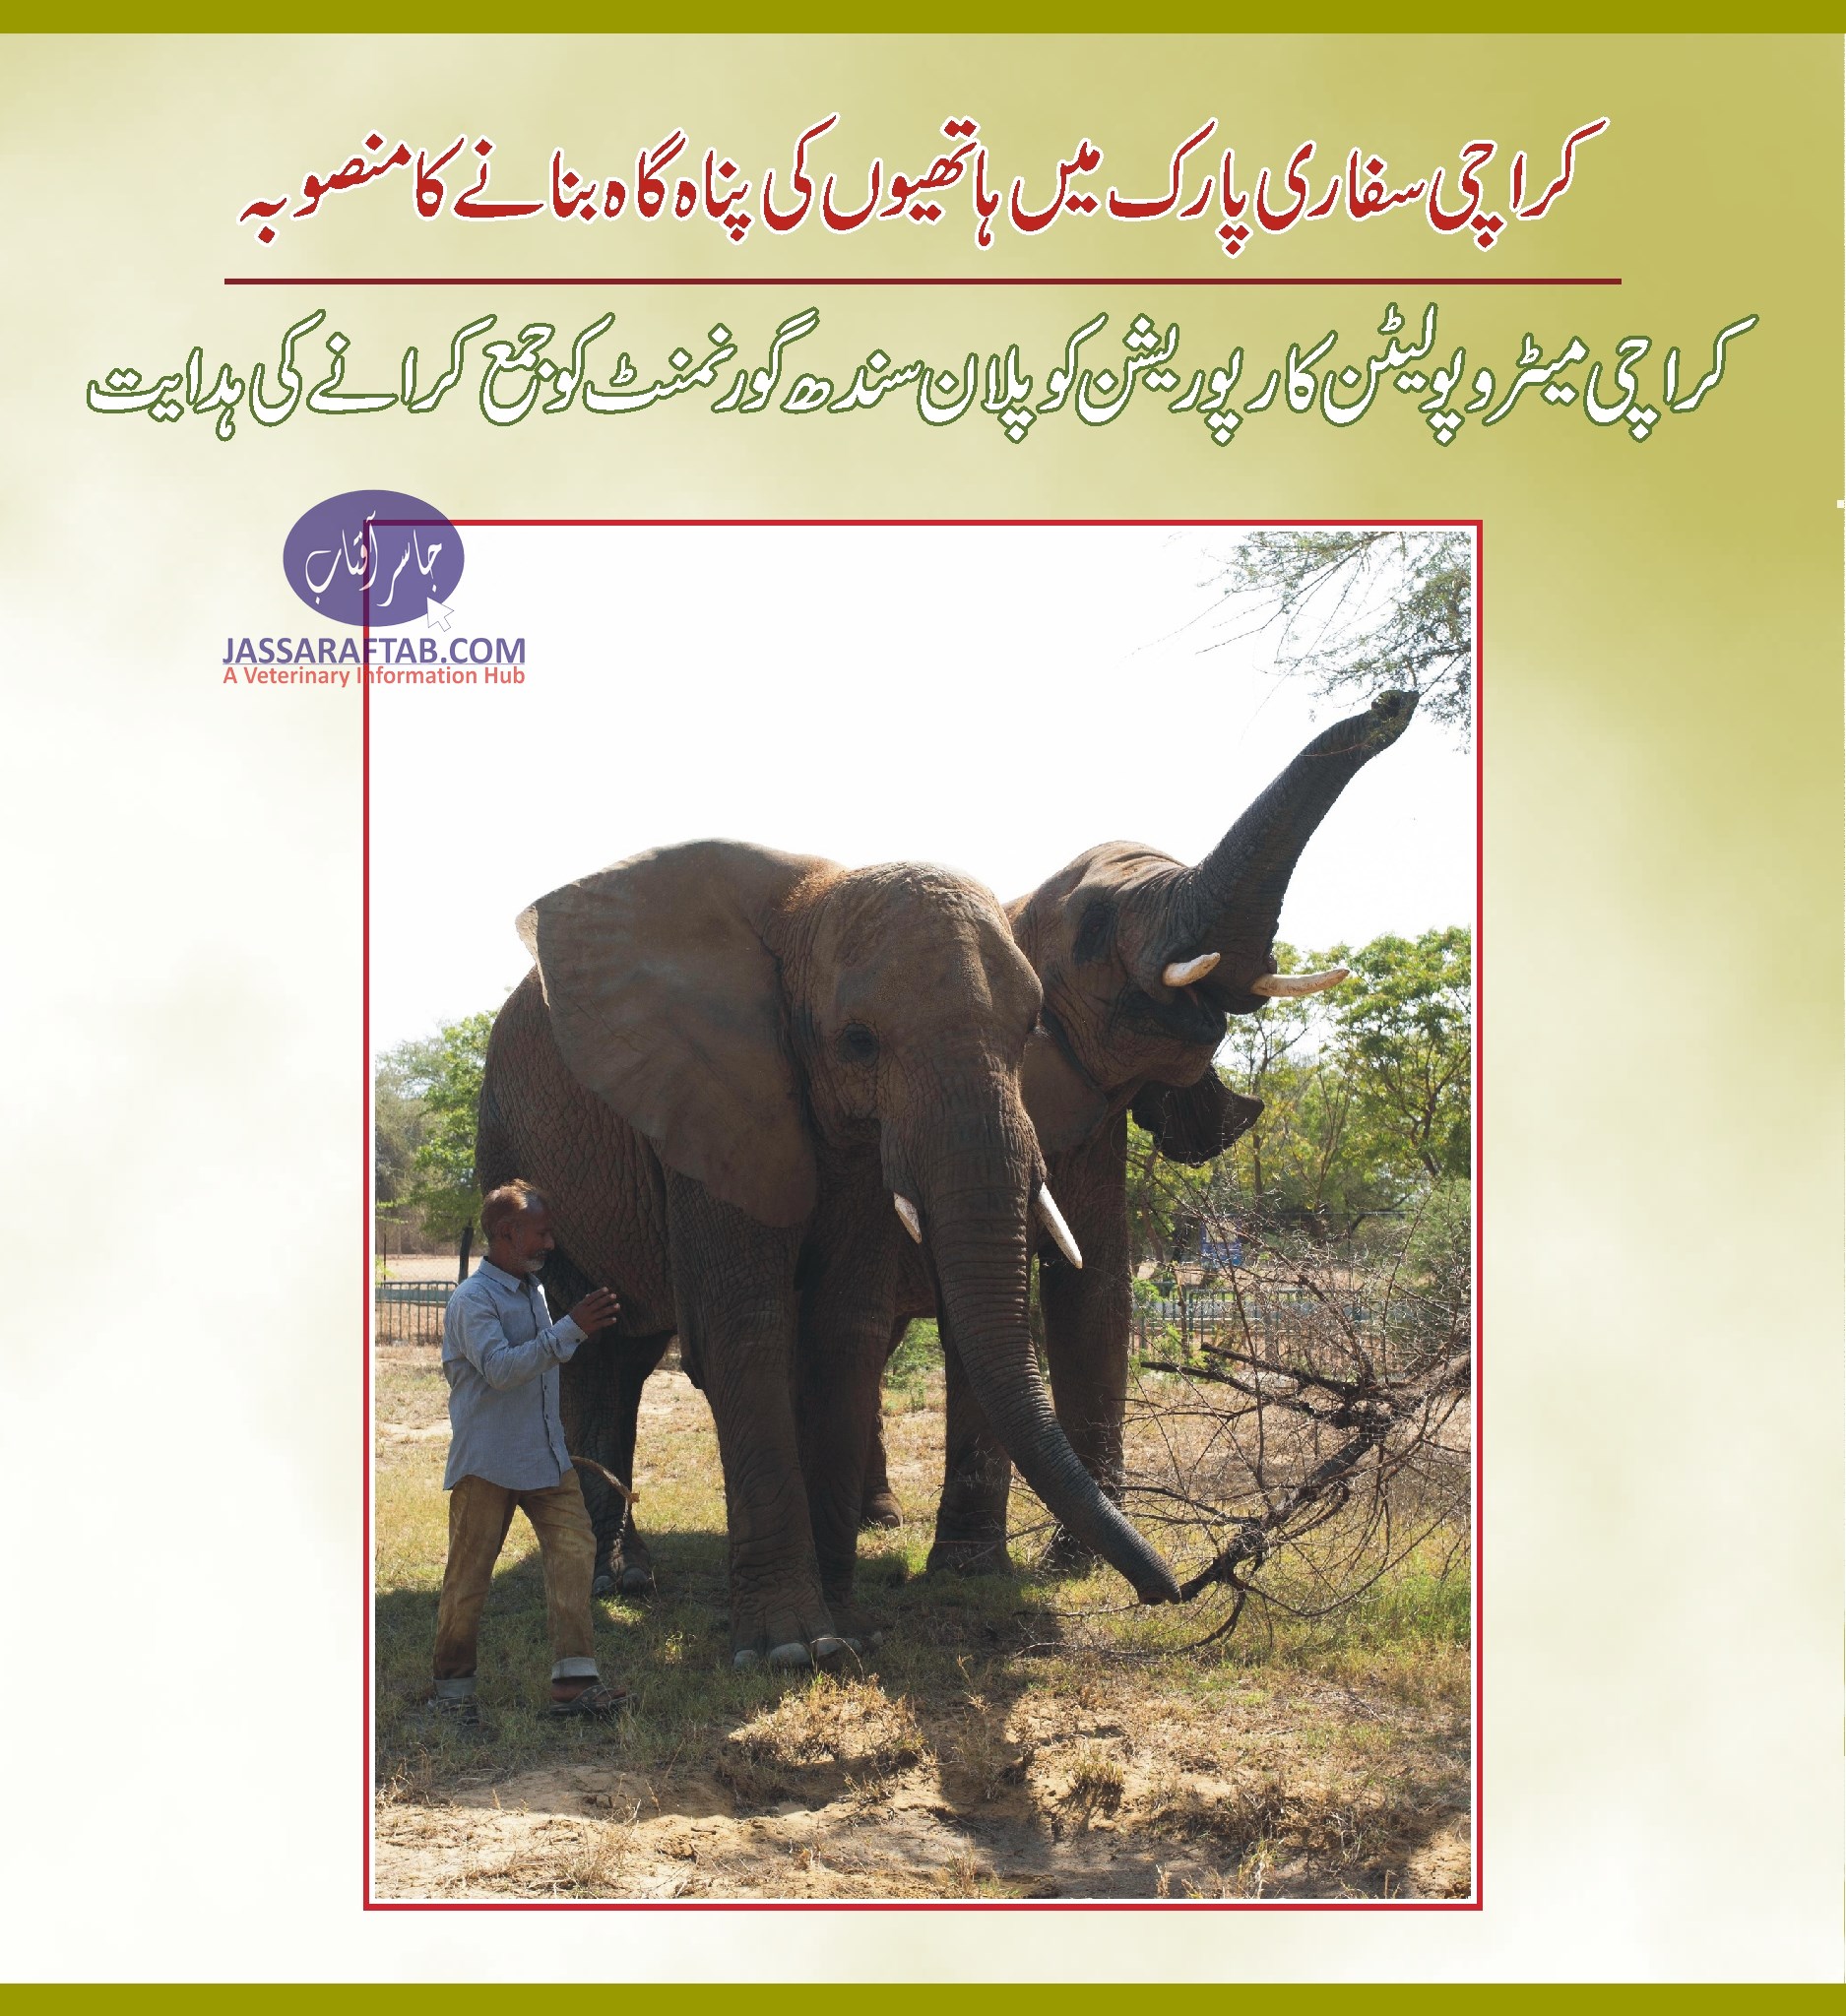 Elephant sanctuary plan to Sindh govt